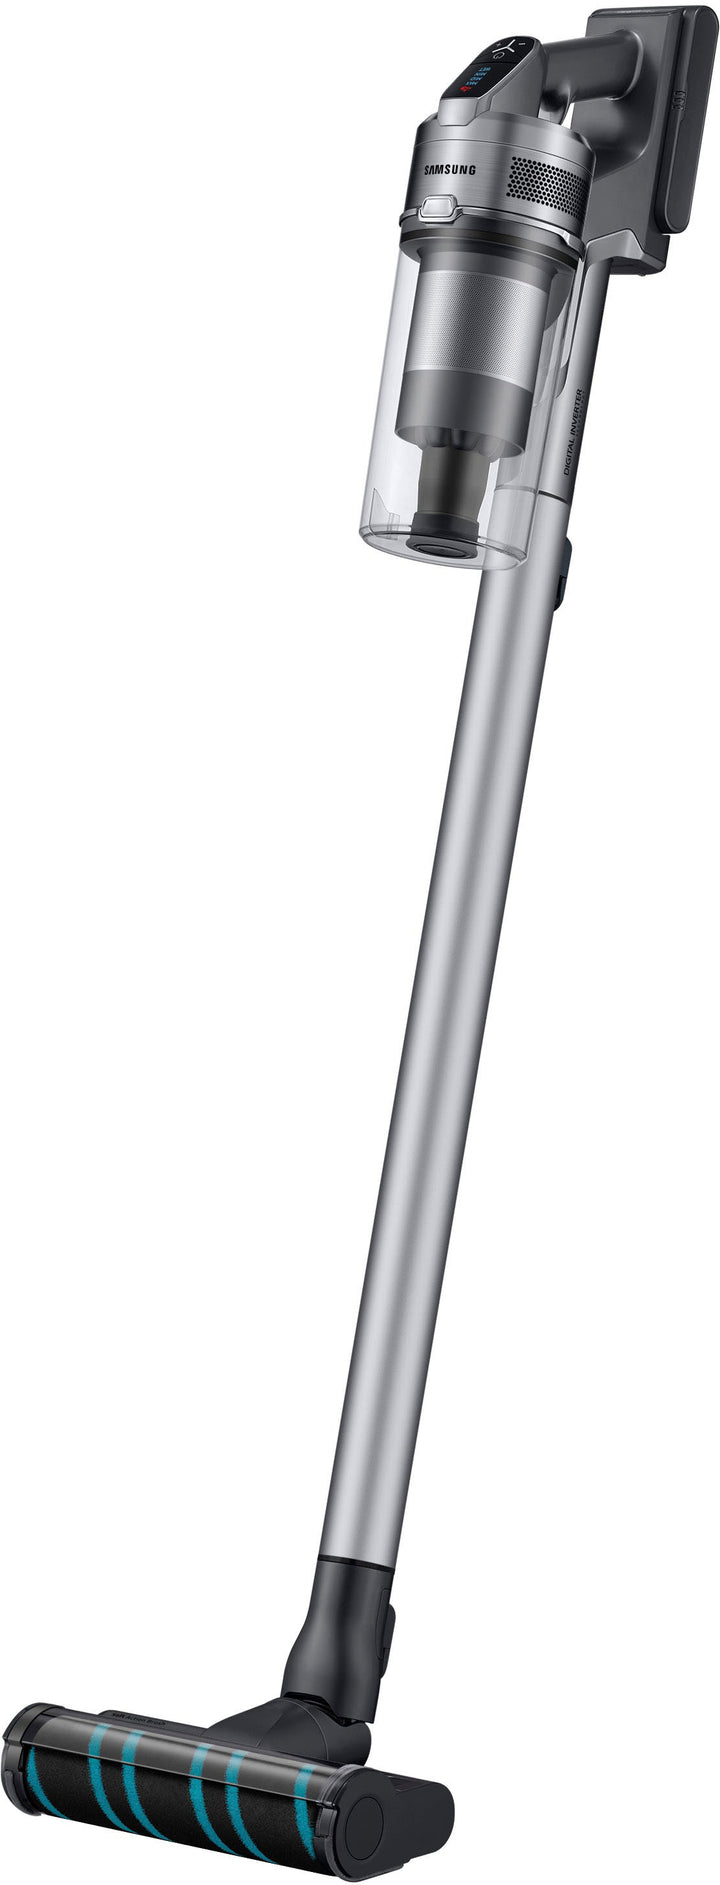 Samsung - Jet 75 Cordless Stick Vacuum - Titan ChroMetal_4